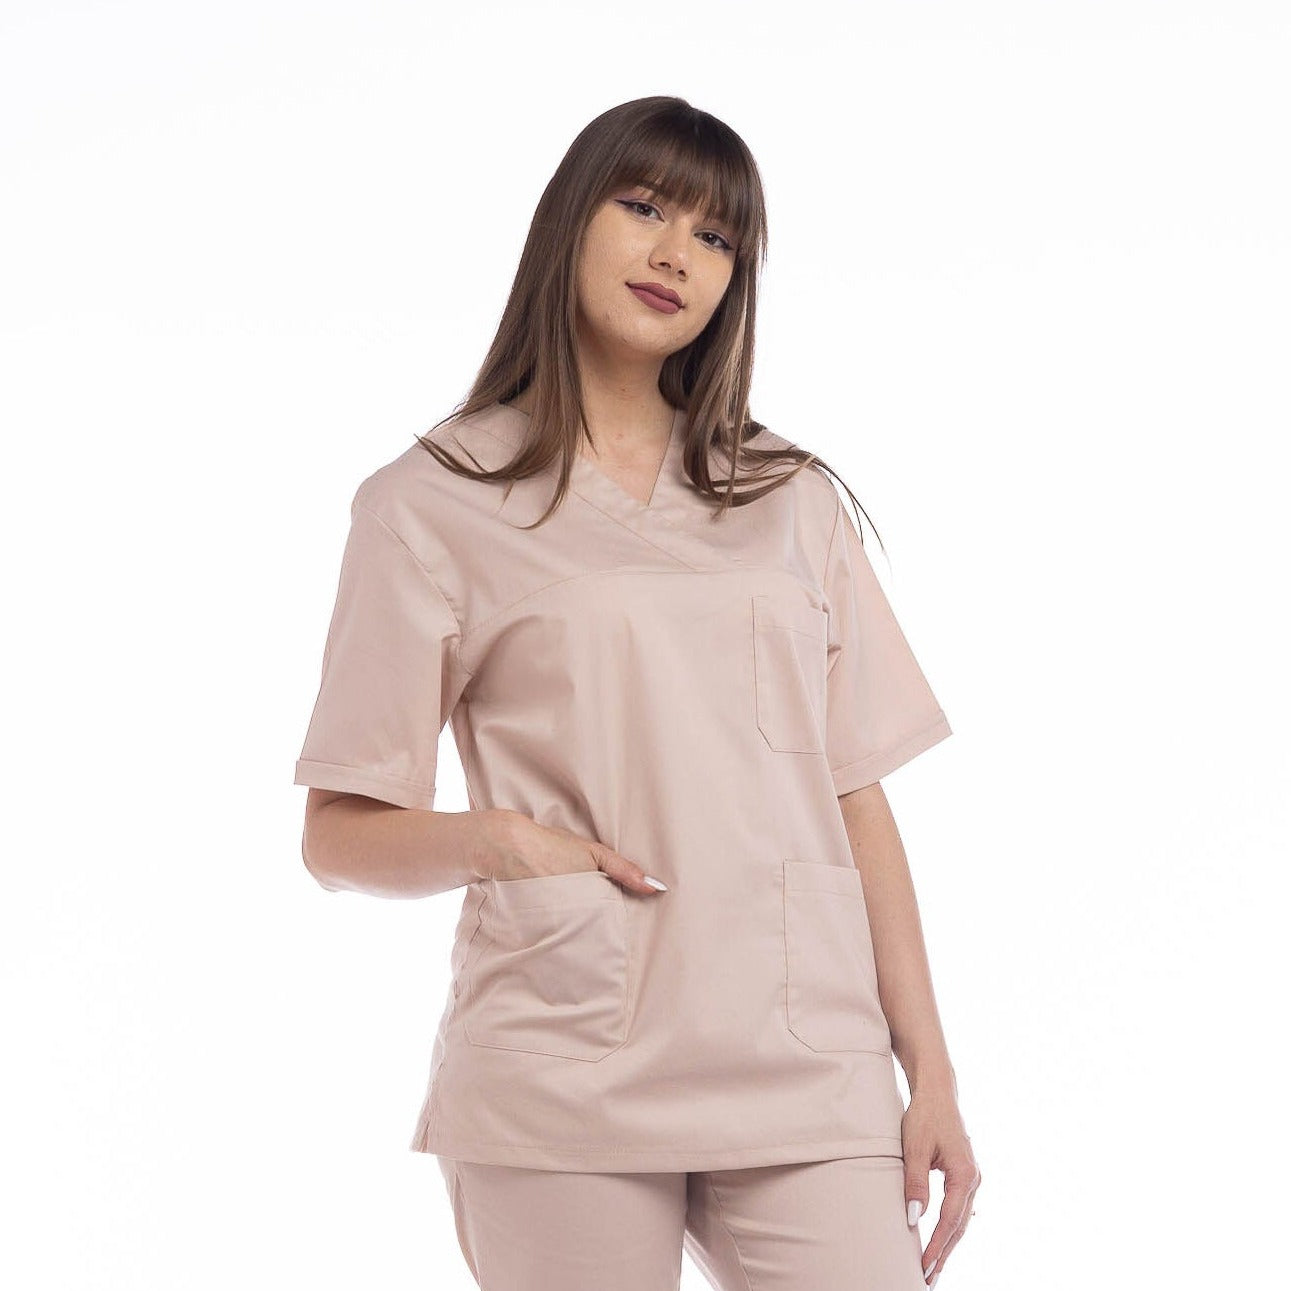 Bluza Medicala Elastica Emily - Inotex.ro